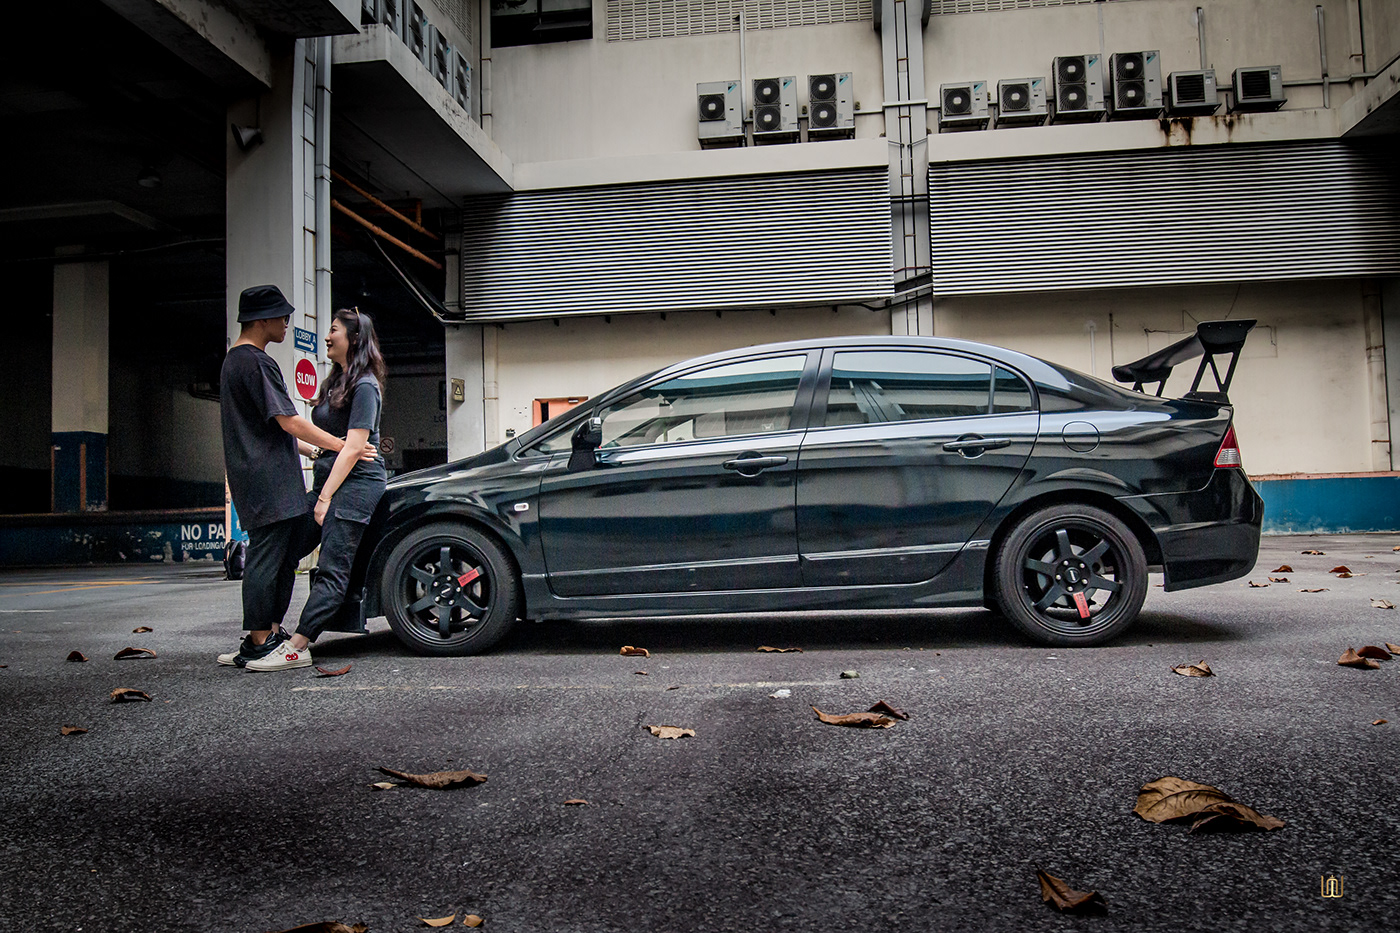 Bella black car ciao Civic Honda matt polish sgcarshoot singaporecar